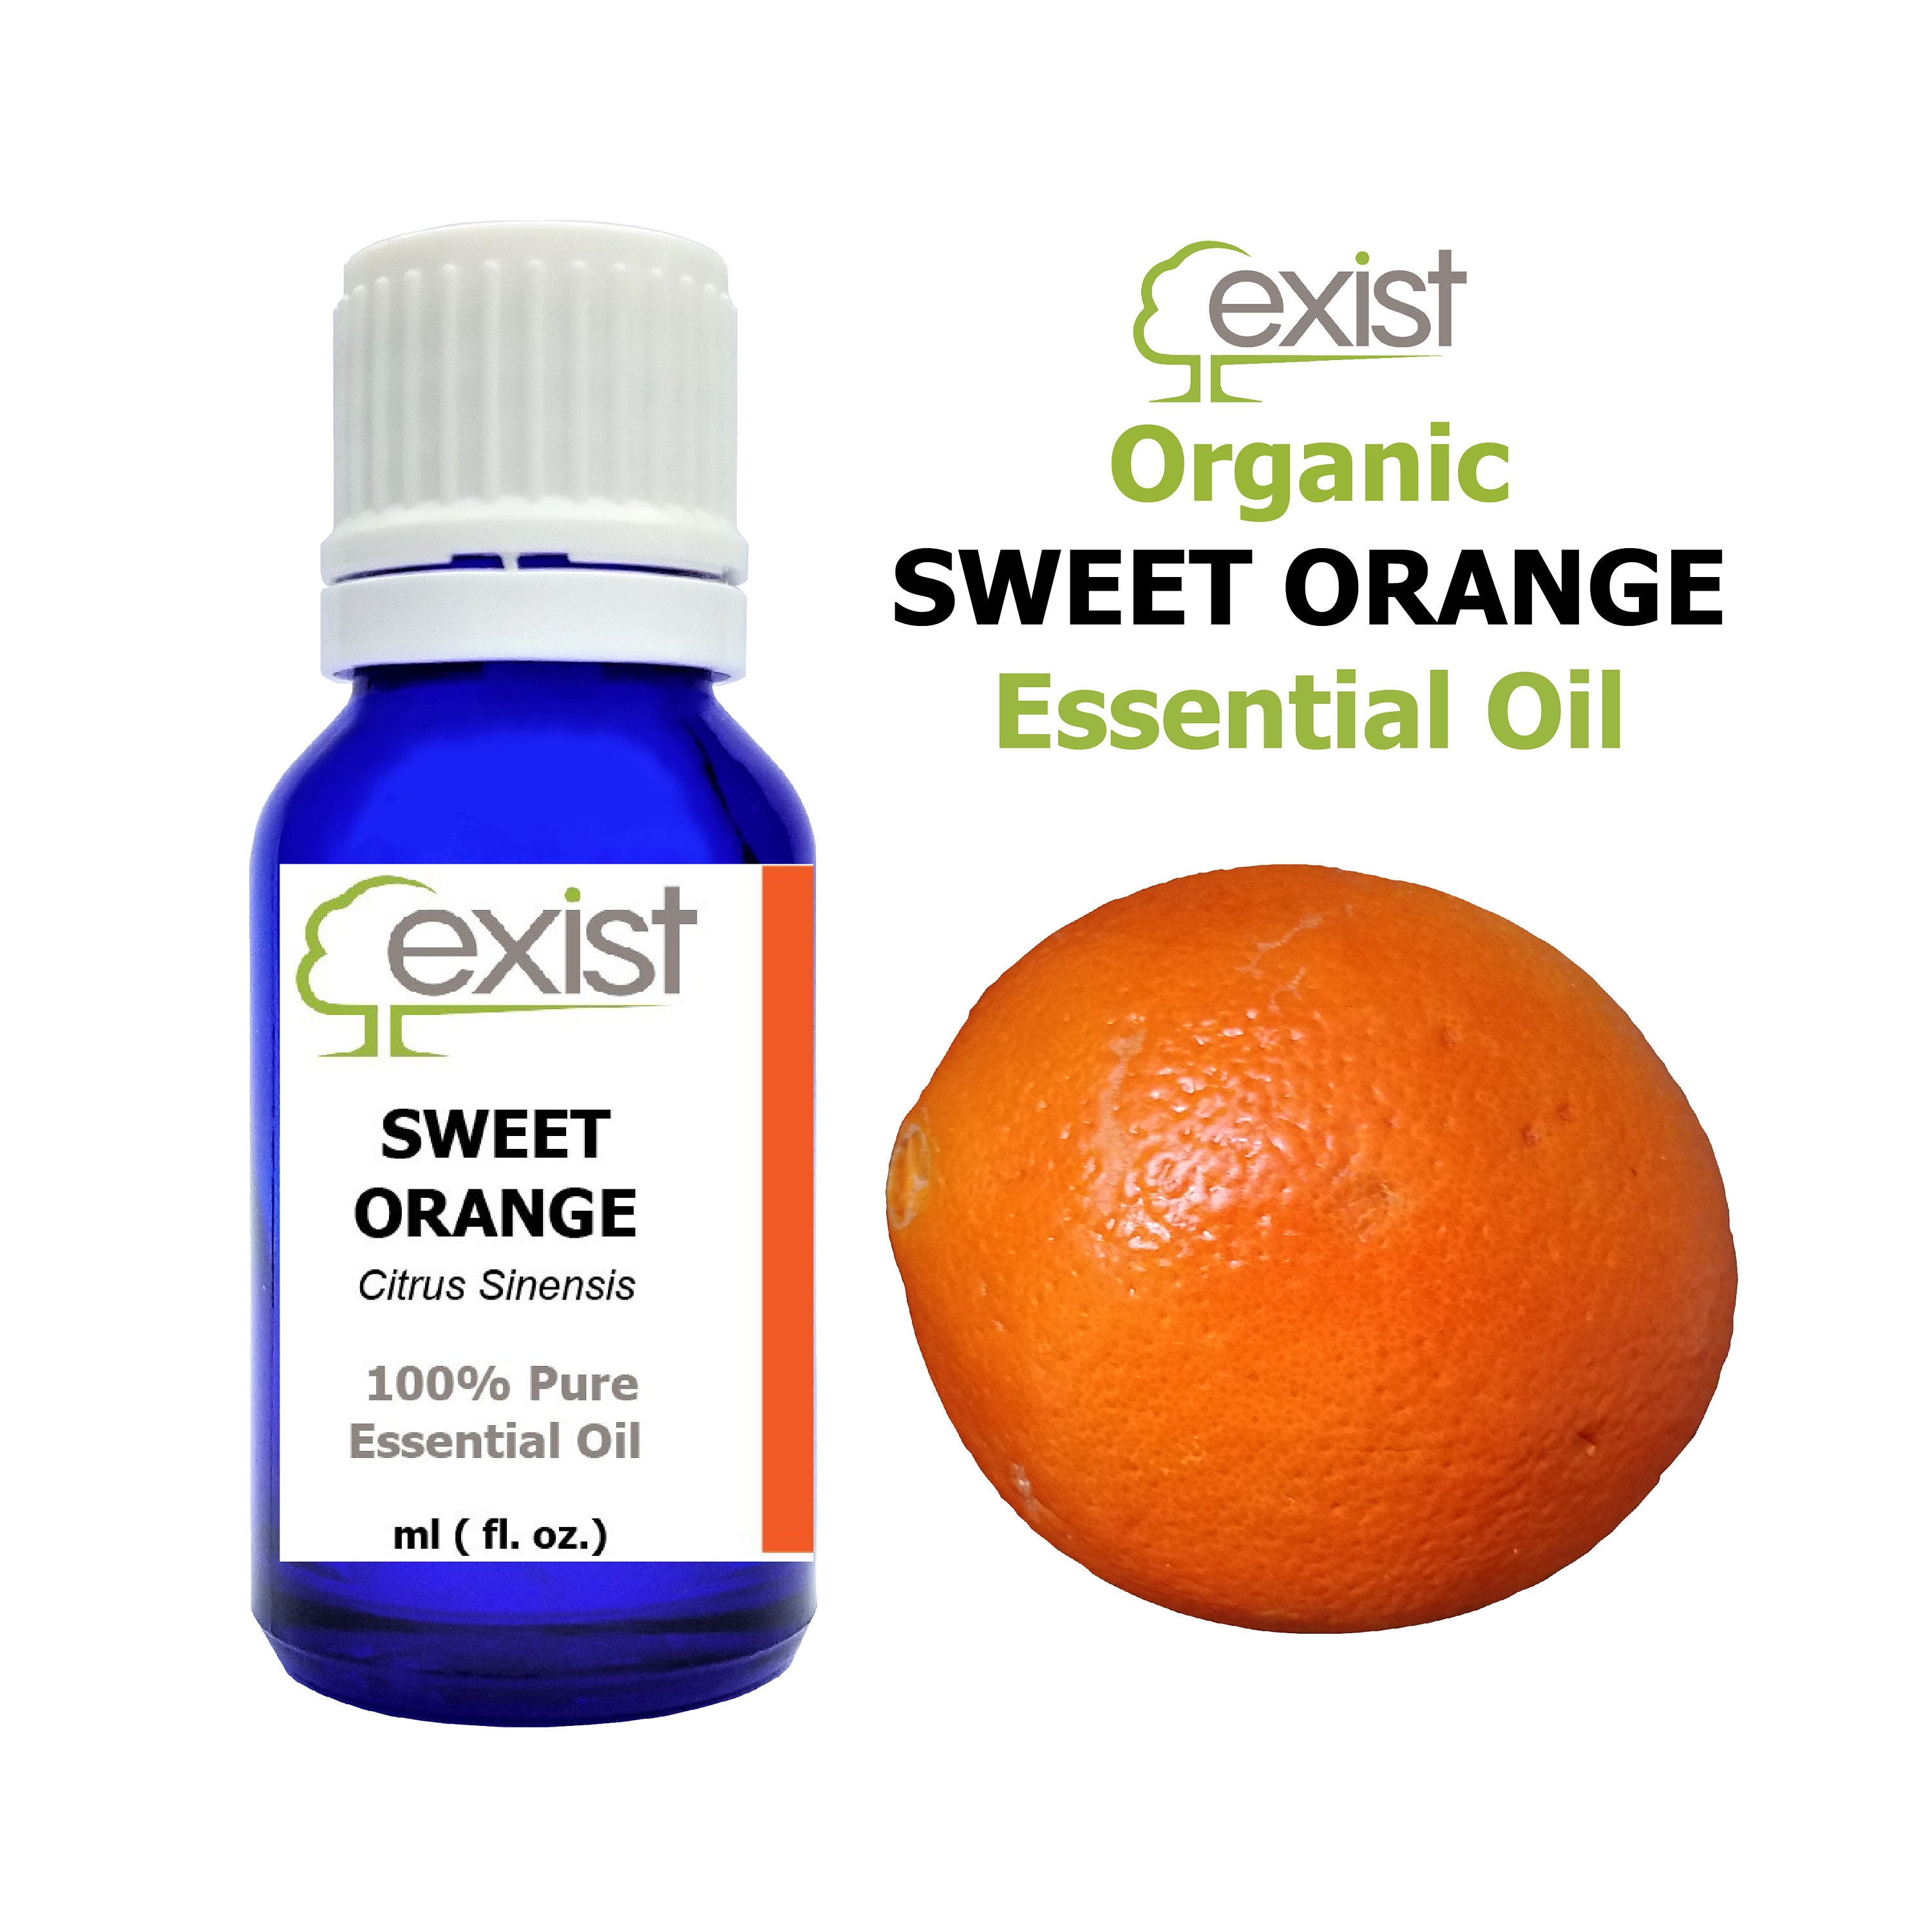 Sweet Orange Essential Oil – Angie's Organics